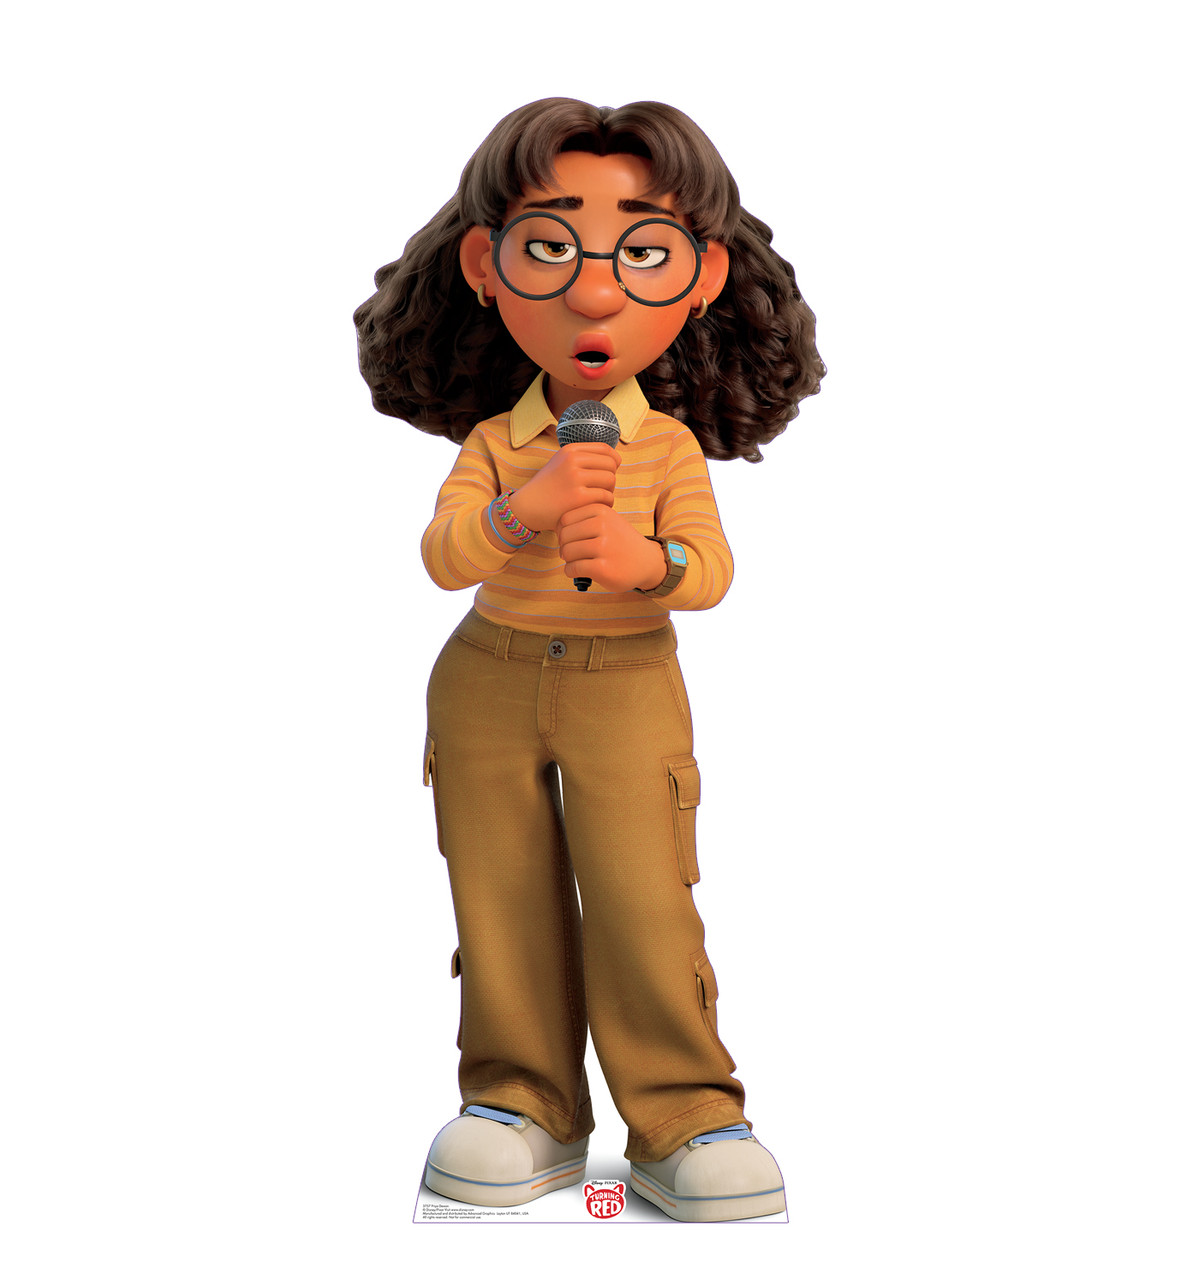 Life-size cardboard standee of Priya Dewan from Disney/Pixar's Turning Red.